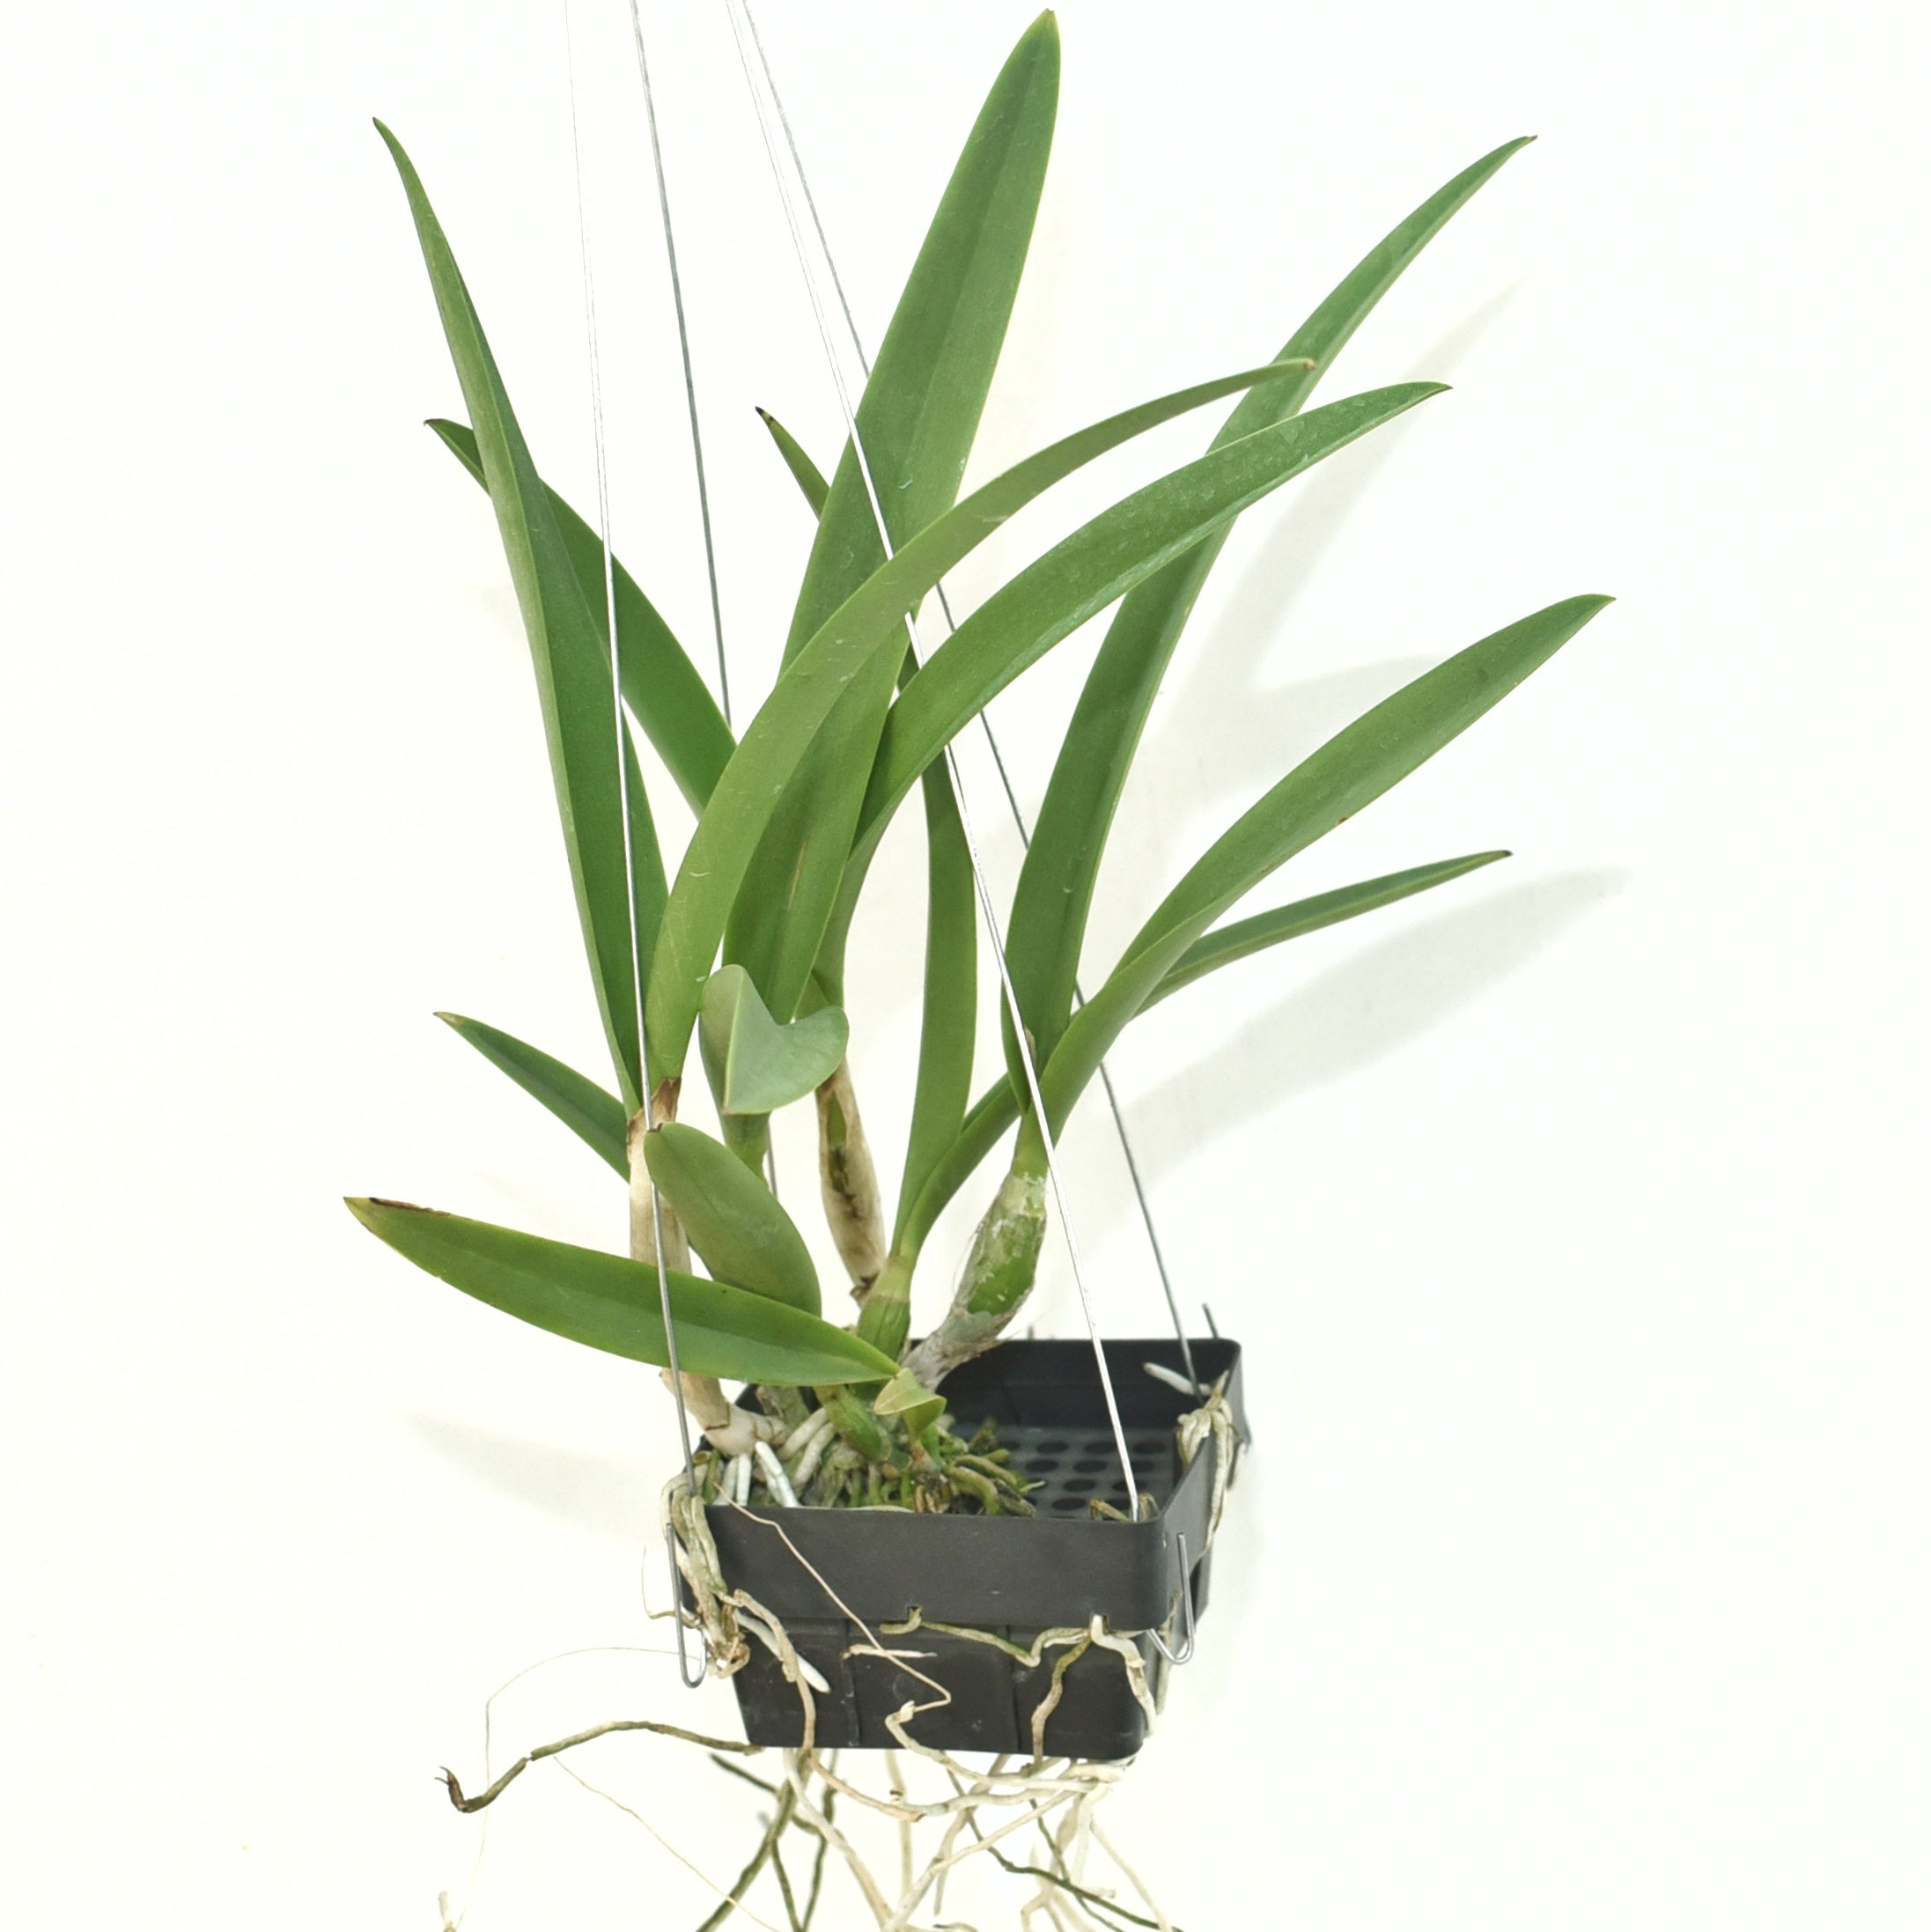 "Brassocattleya Jairak Star x Encyclia randii orchid plant: Healthy foliage with budding flower spikes, a promising display of hybrid beauty."